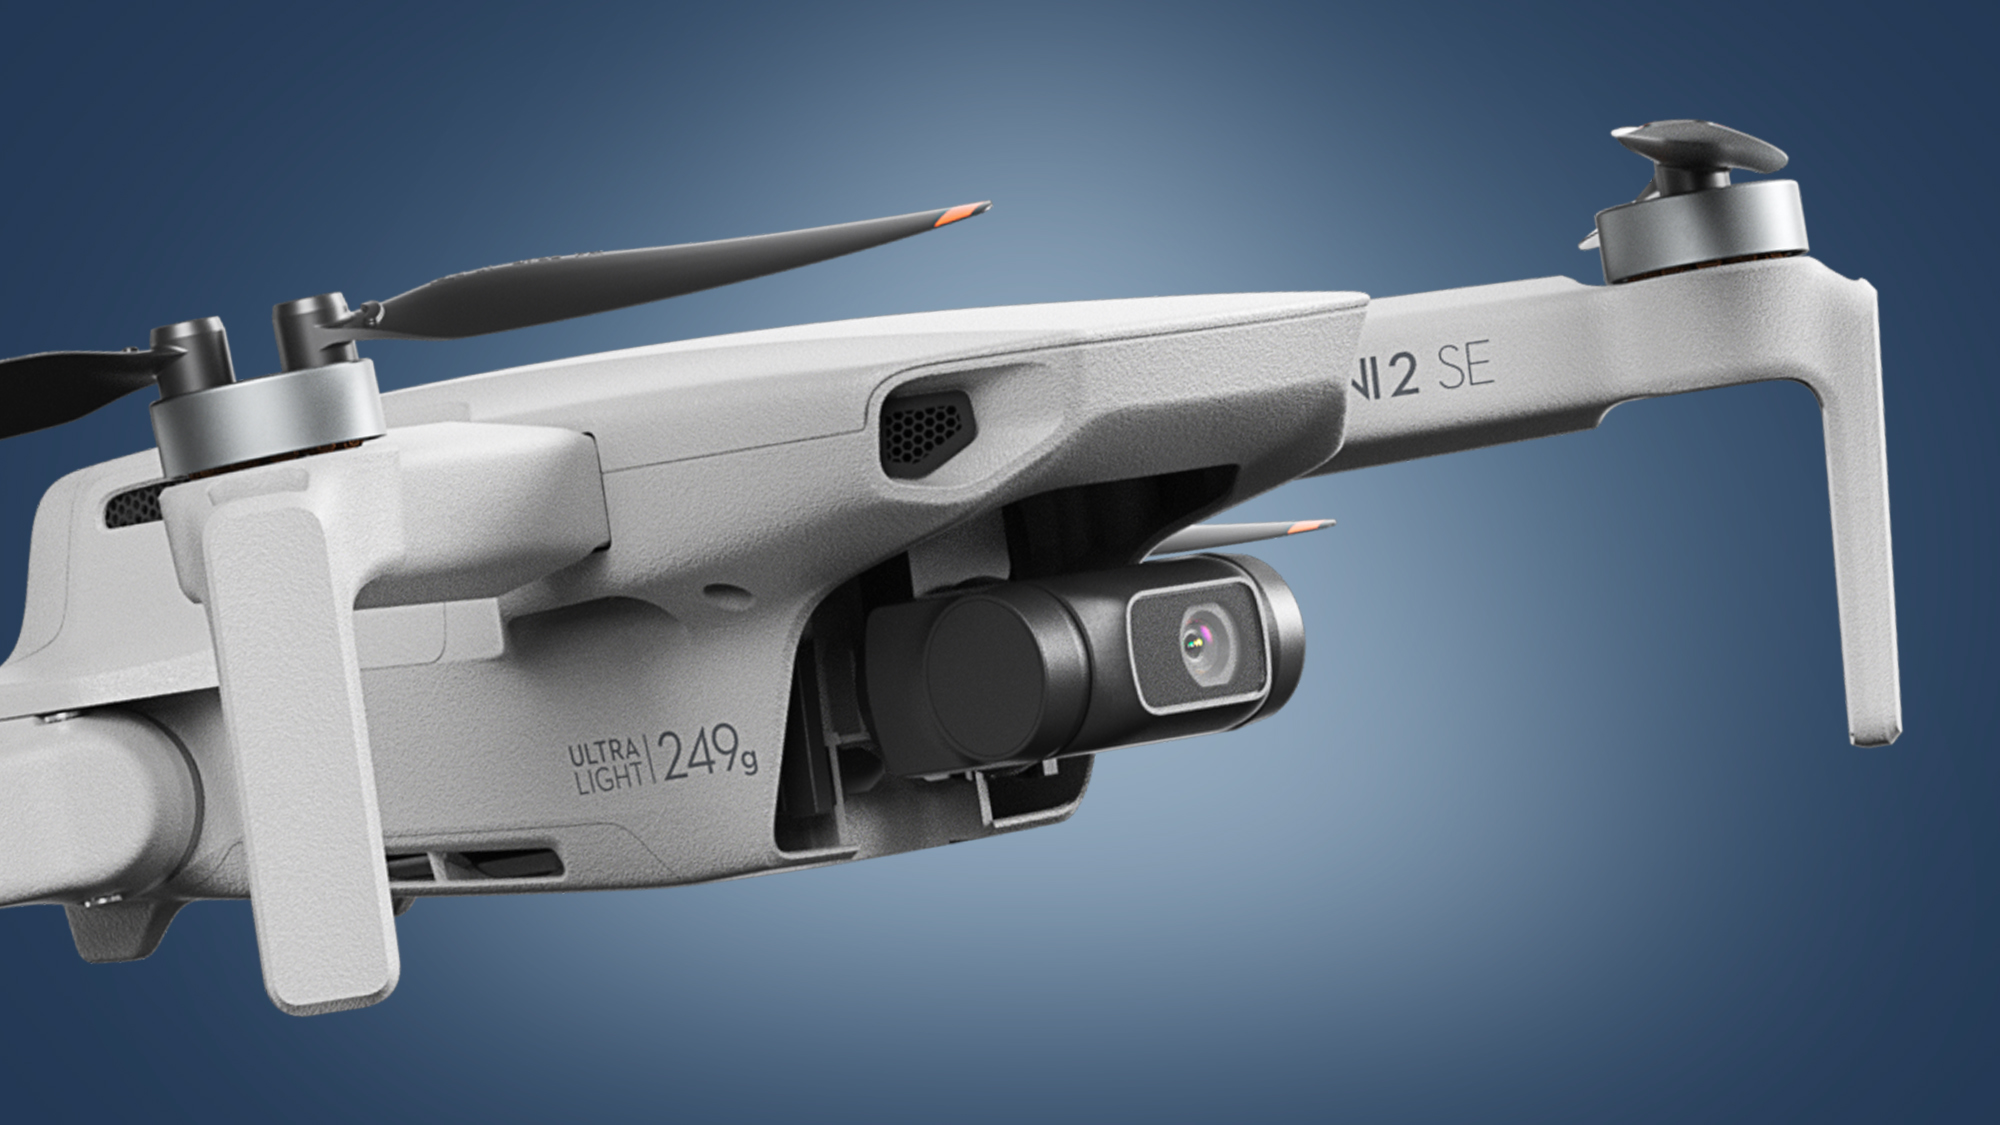 Announcing DJI Mini 2 SE Drone